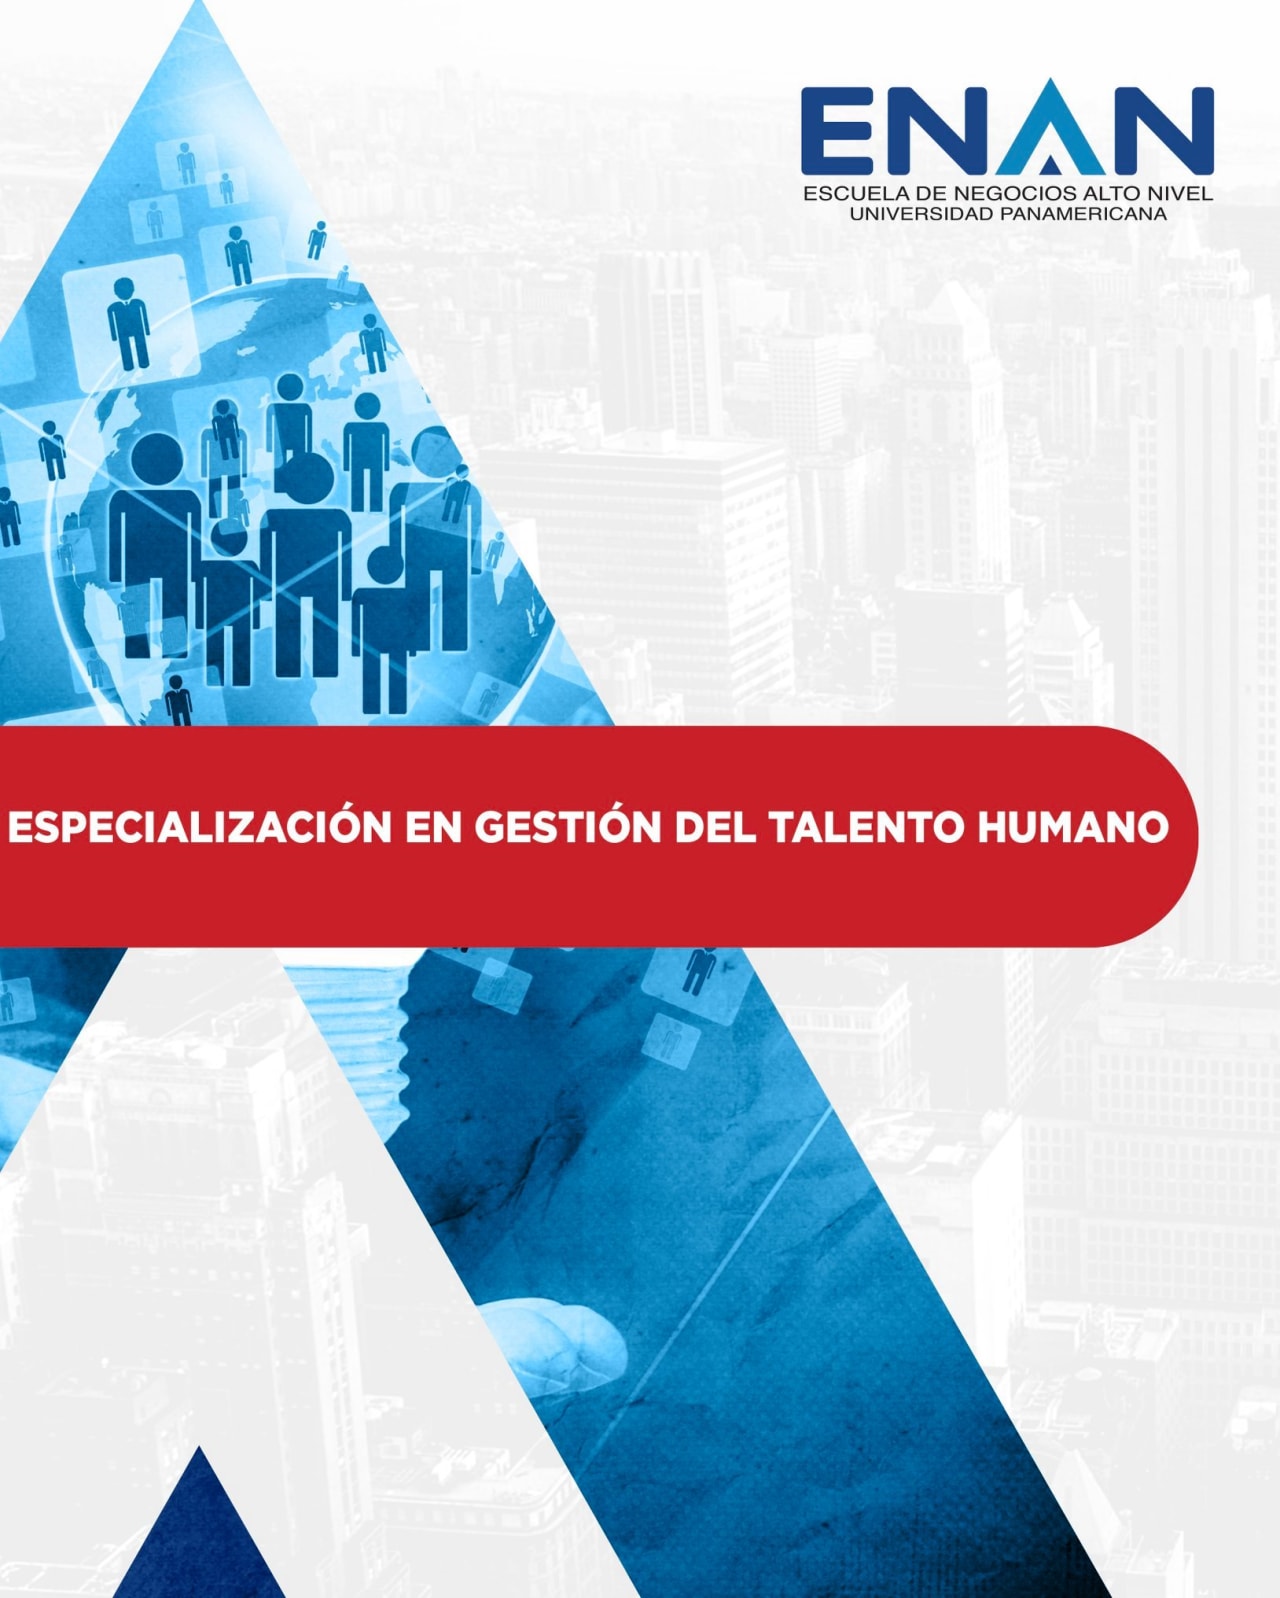 Escuela de Negocios Alto Nivel - Universidad Panamericana de Guatemala 인적 재능 관리 전문화